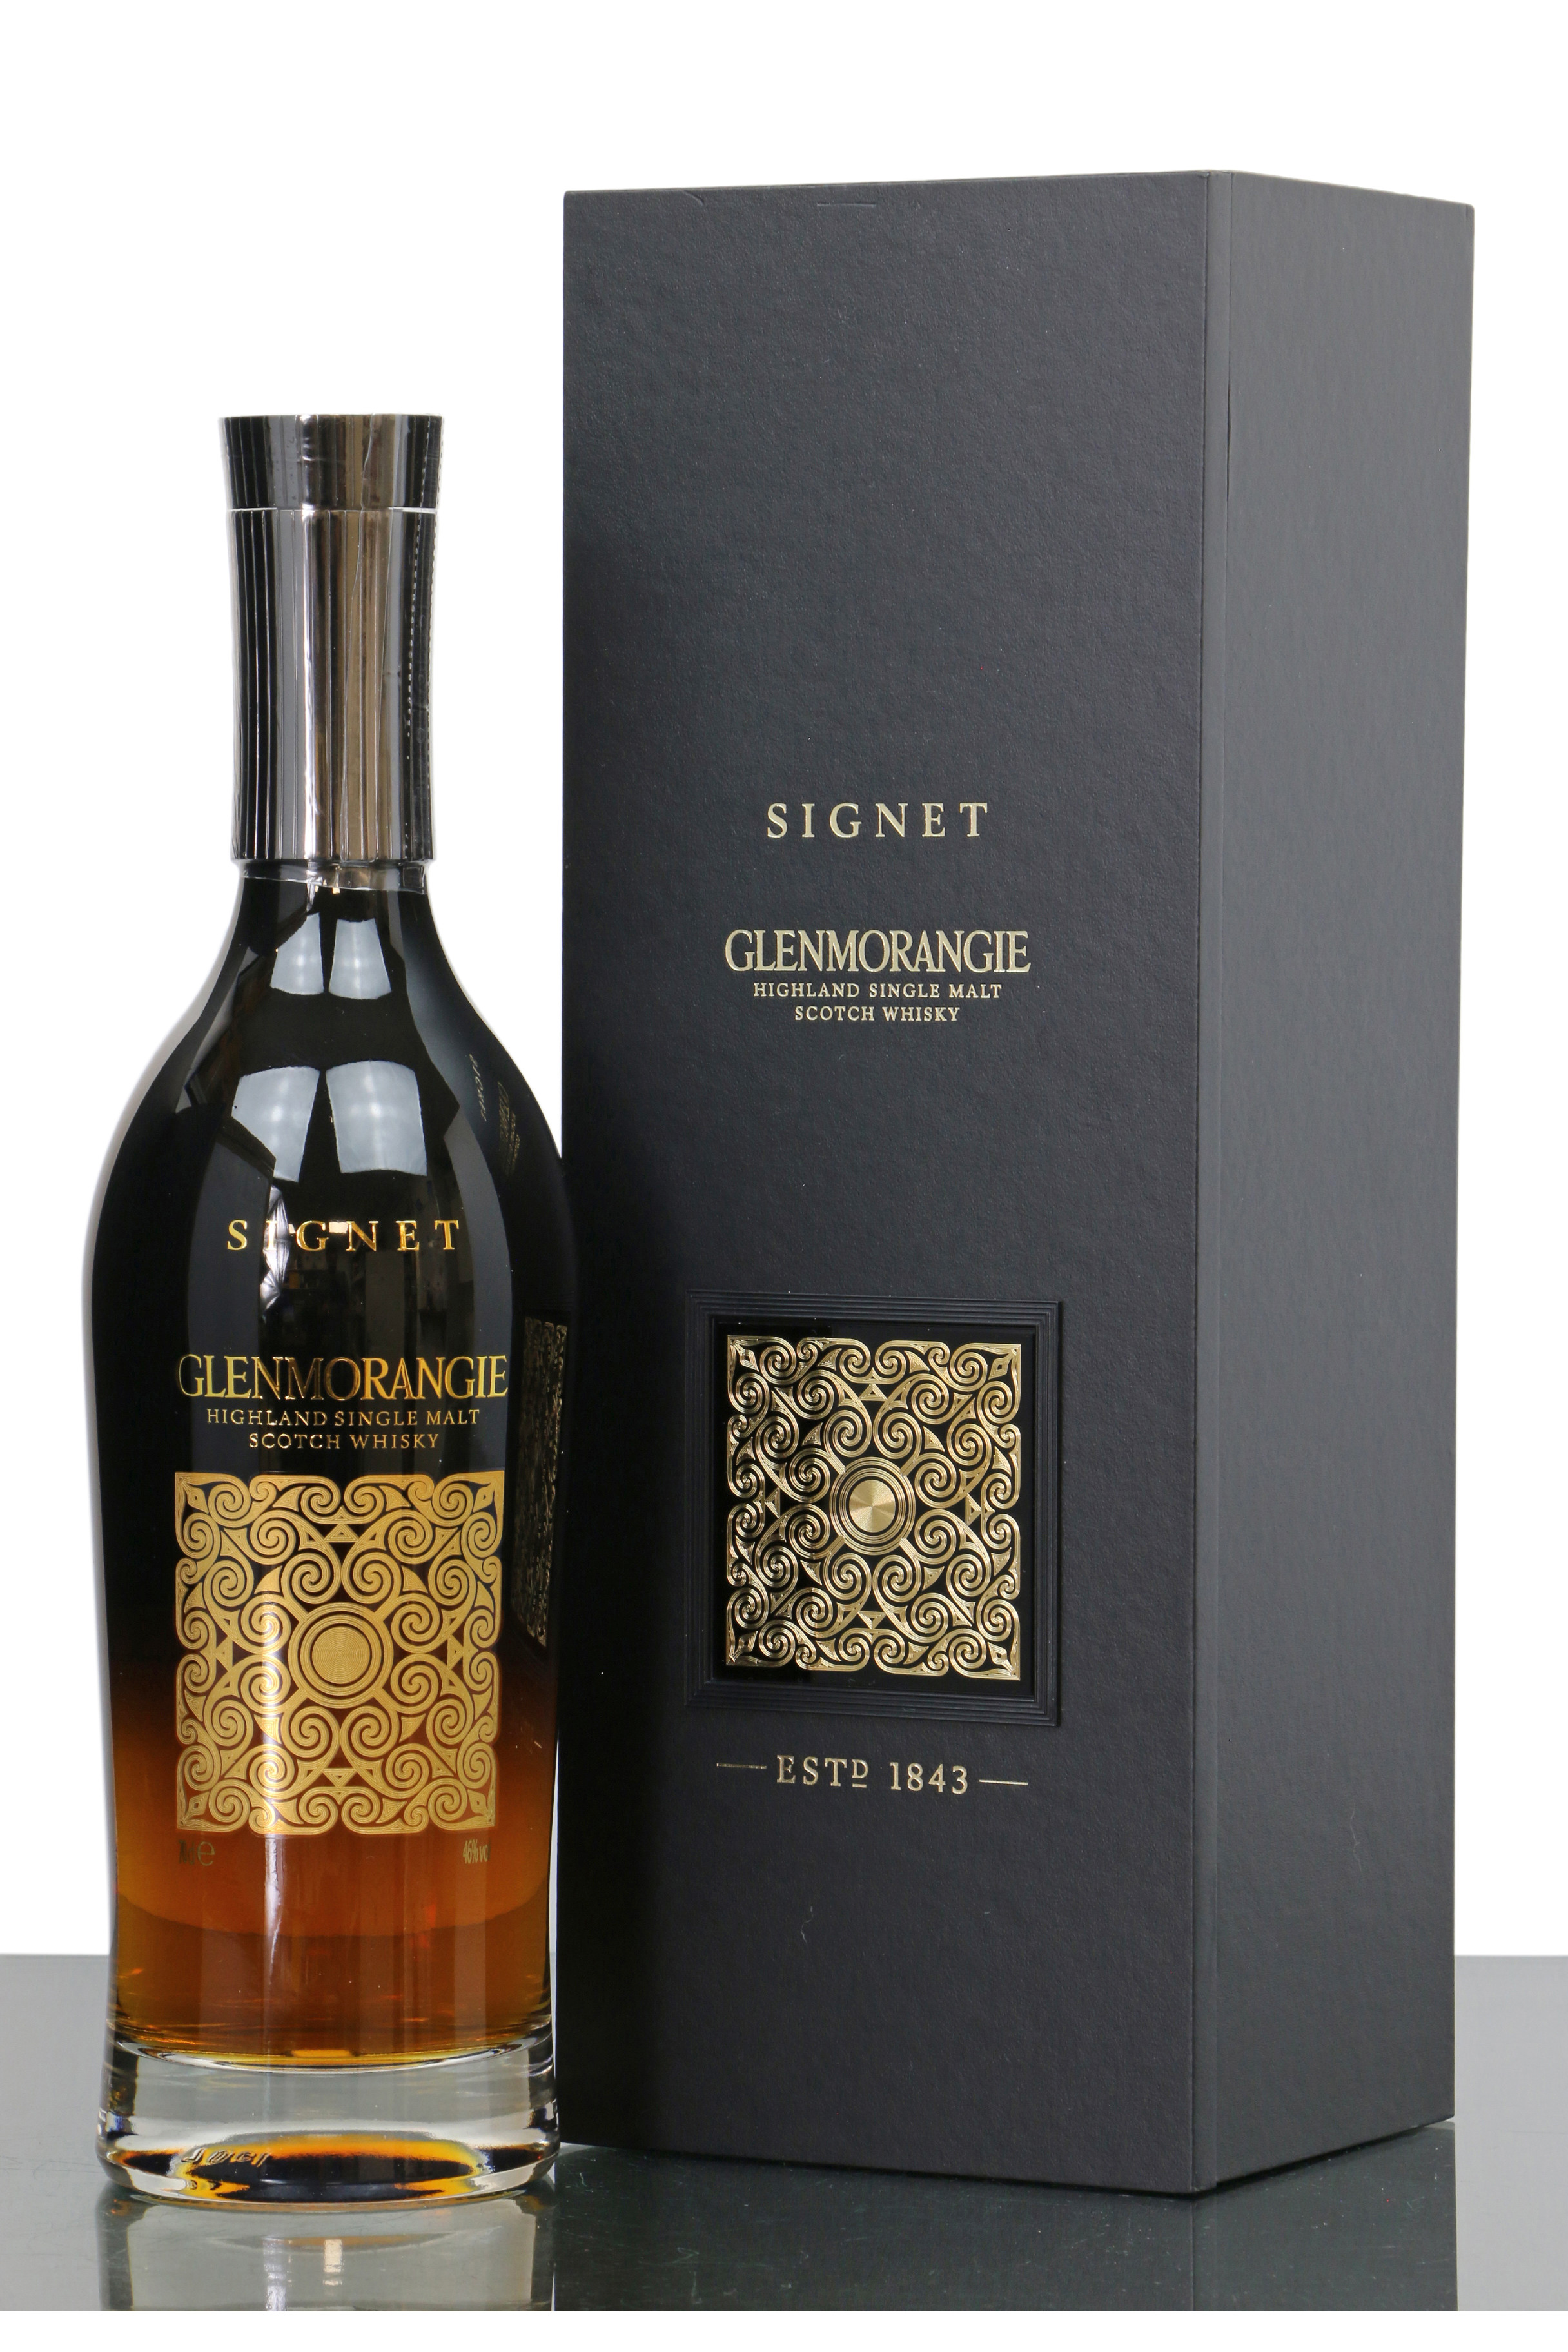 Glenmorangie Signet Highland Single Malt Scotch Whisky: award